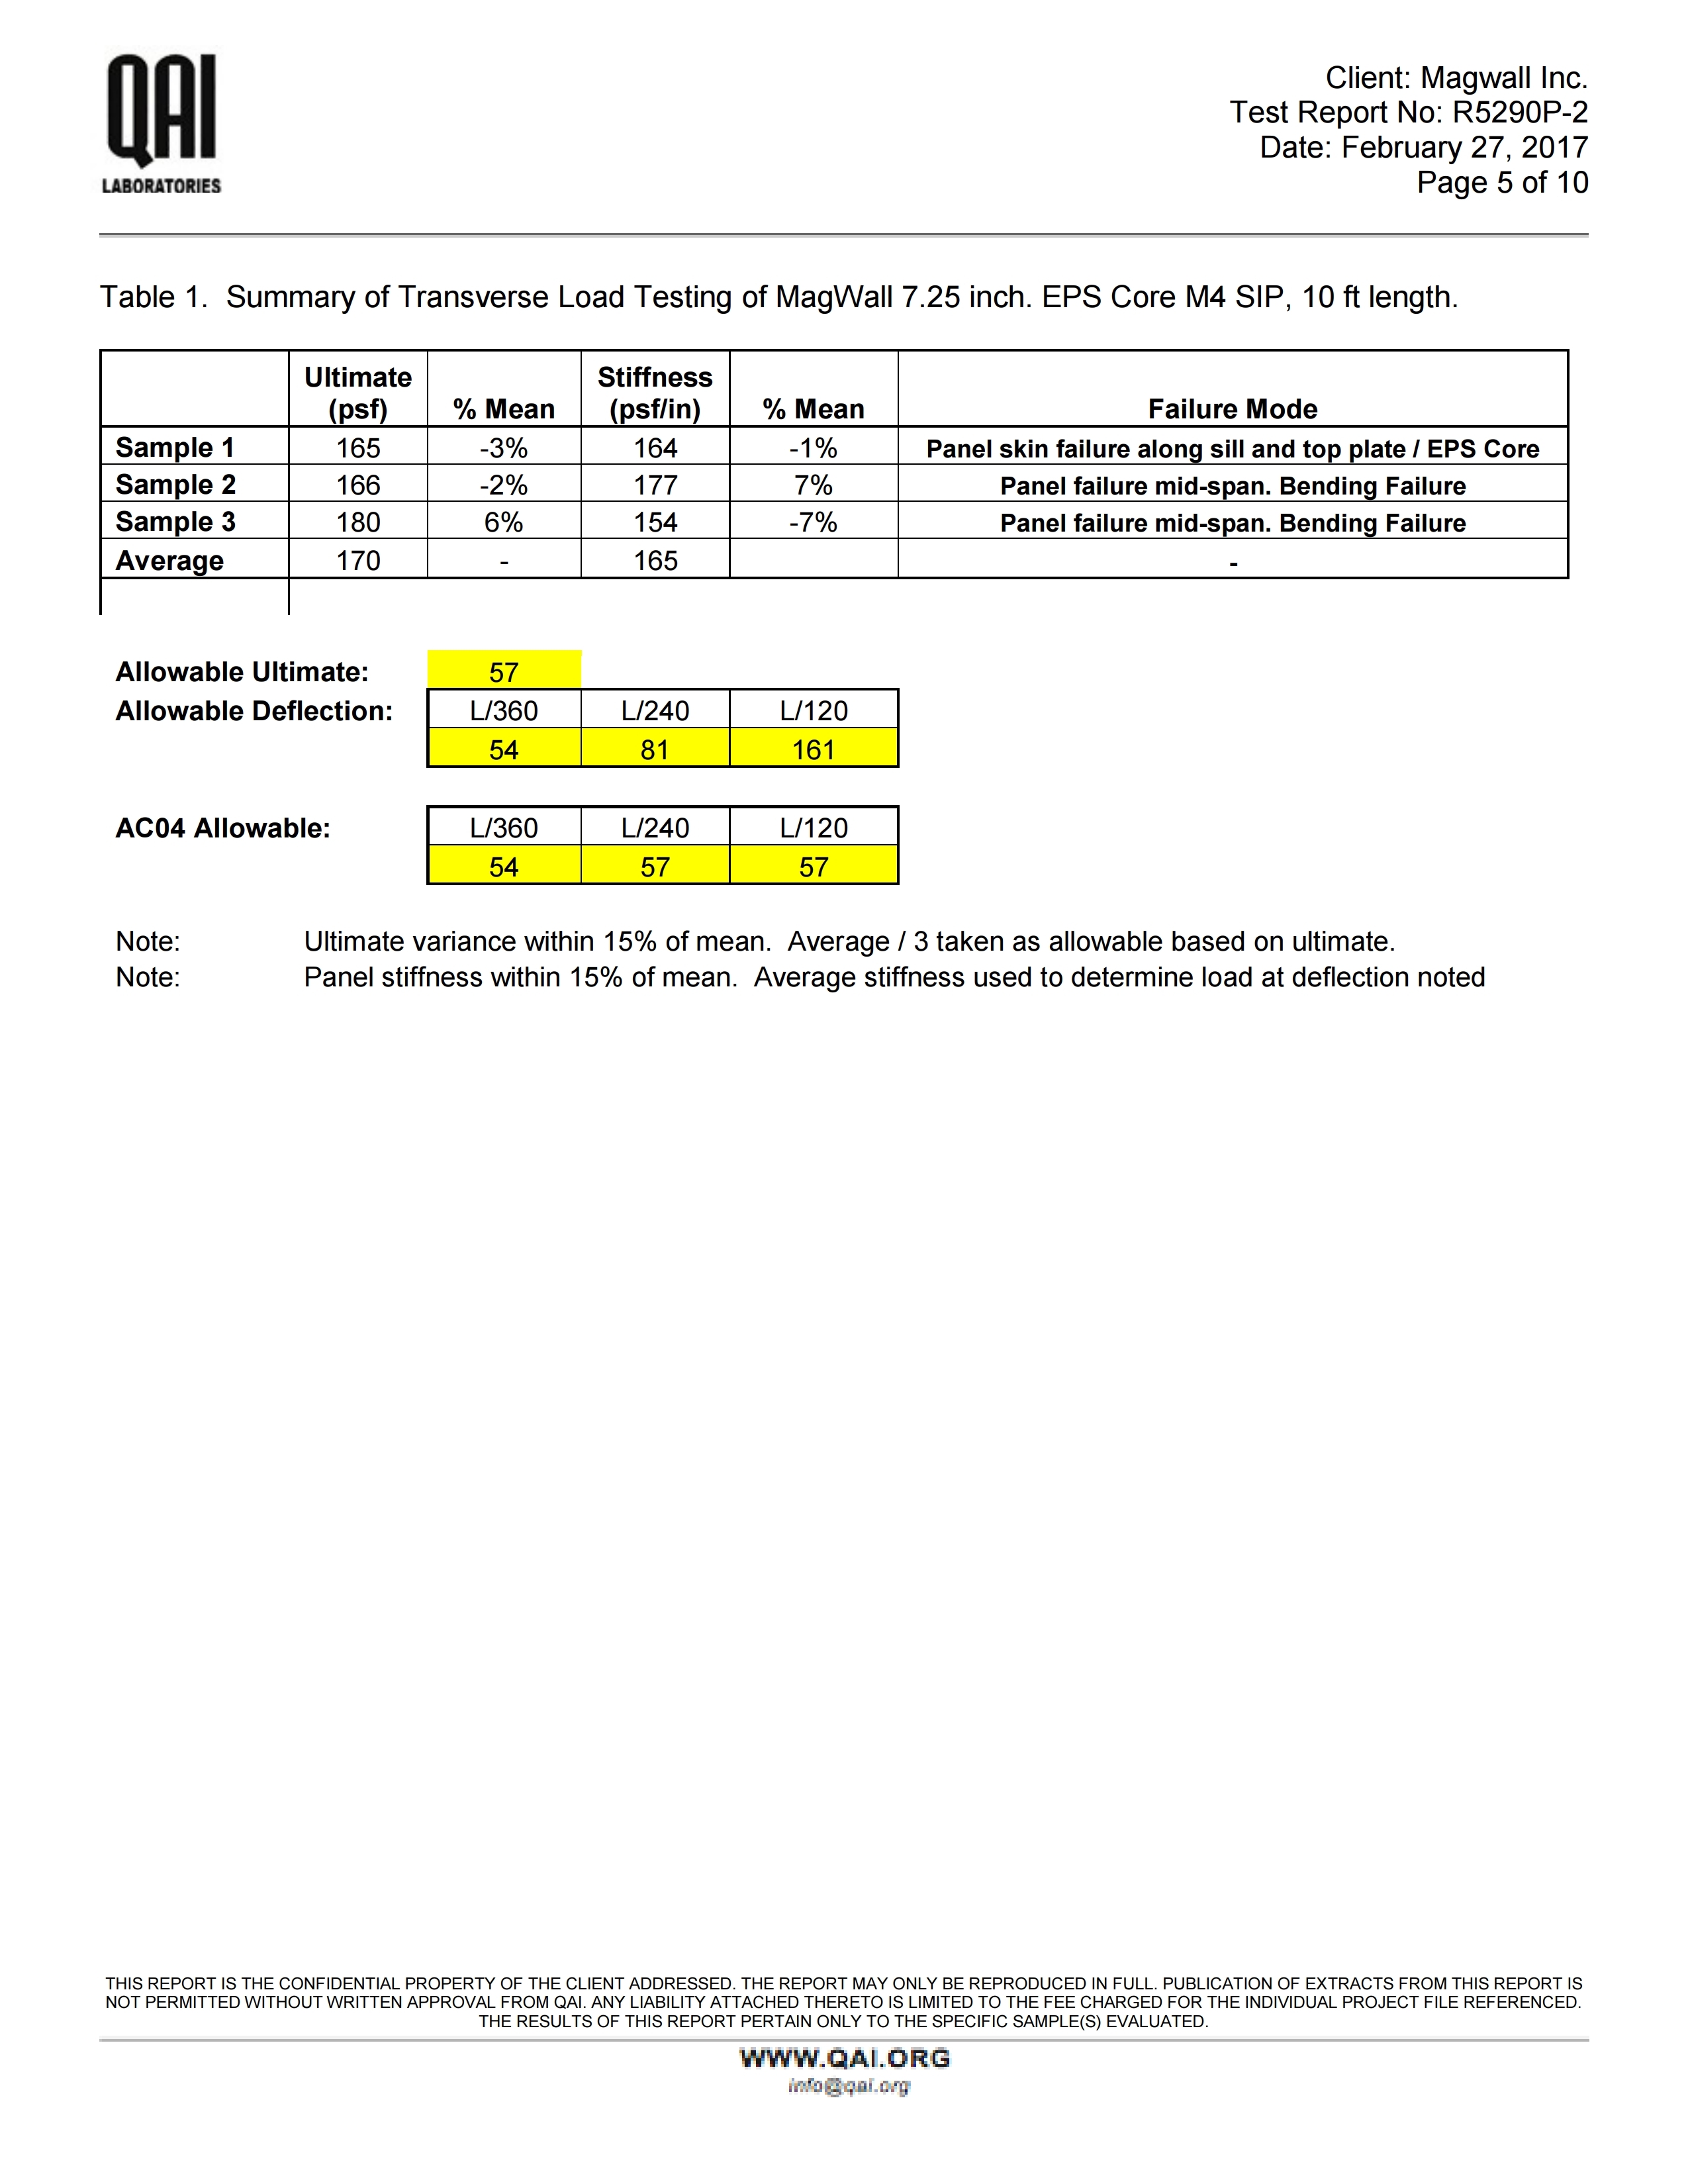 RJ5290P-2-Magwall-7.25 SIP-AC04-E72-Transverse-022717 ML RE.. (1).pdf_page_05.jpg